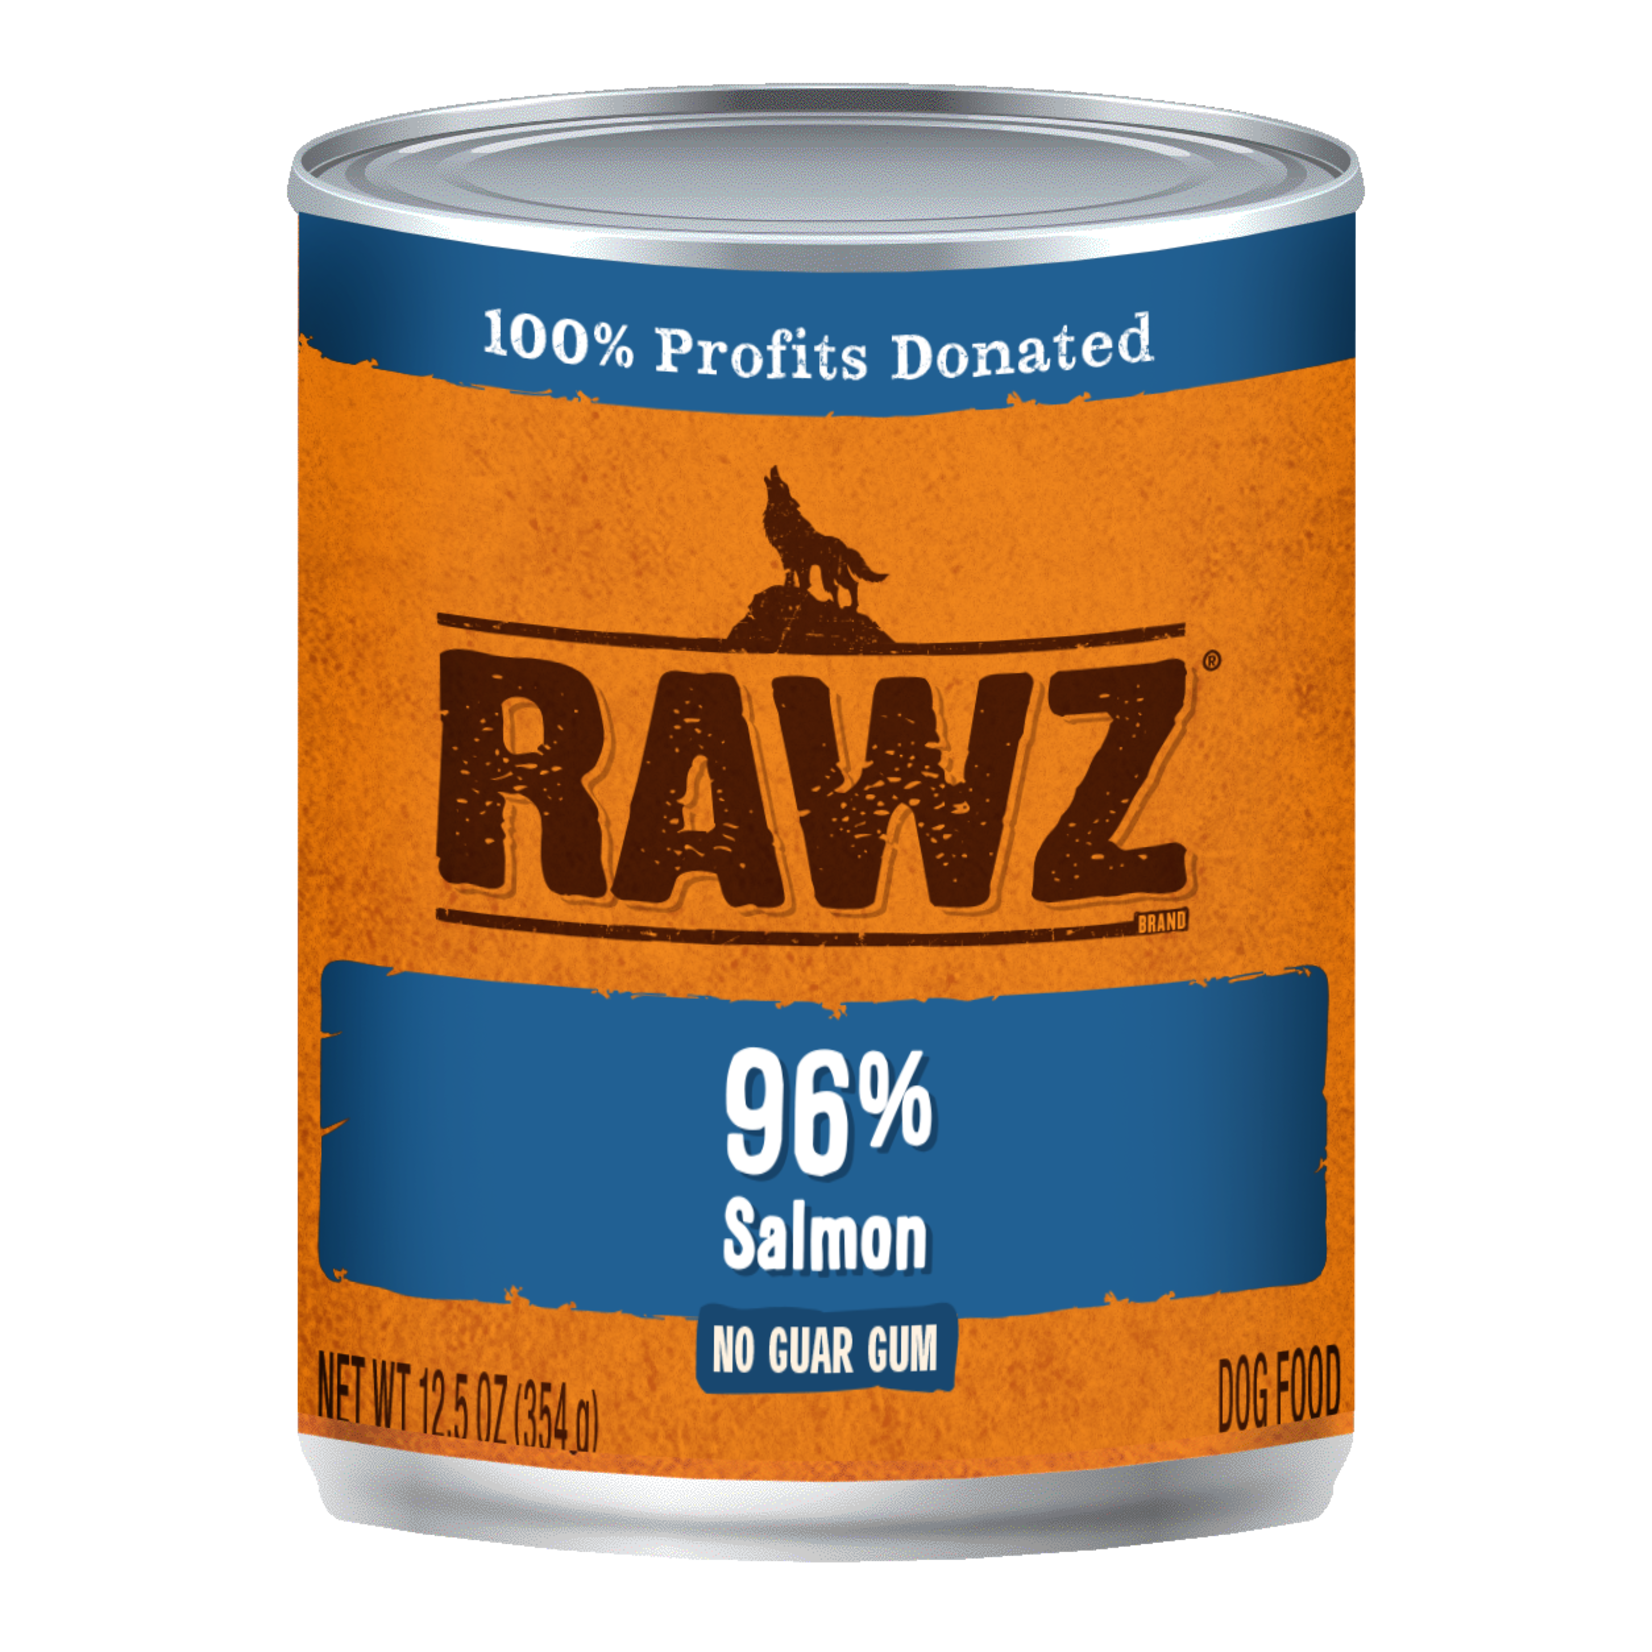 RAWZ Natural Pet Food 96% Salmon Canned Dog Food